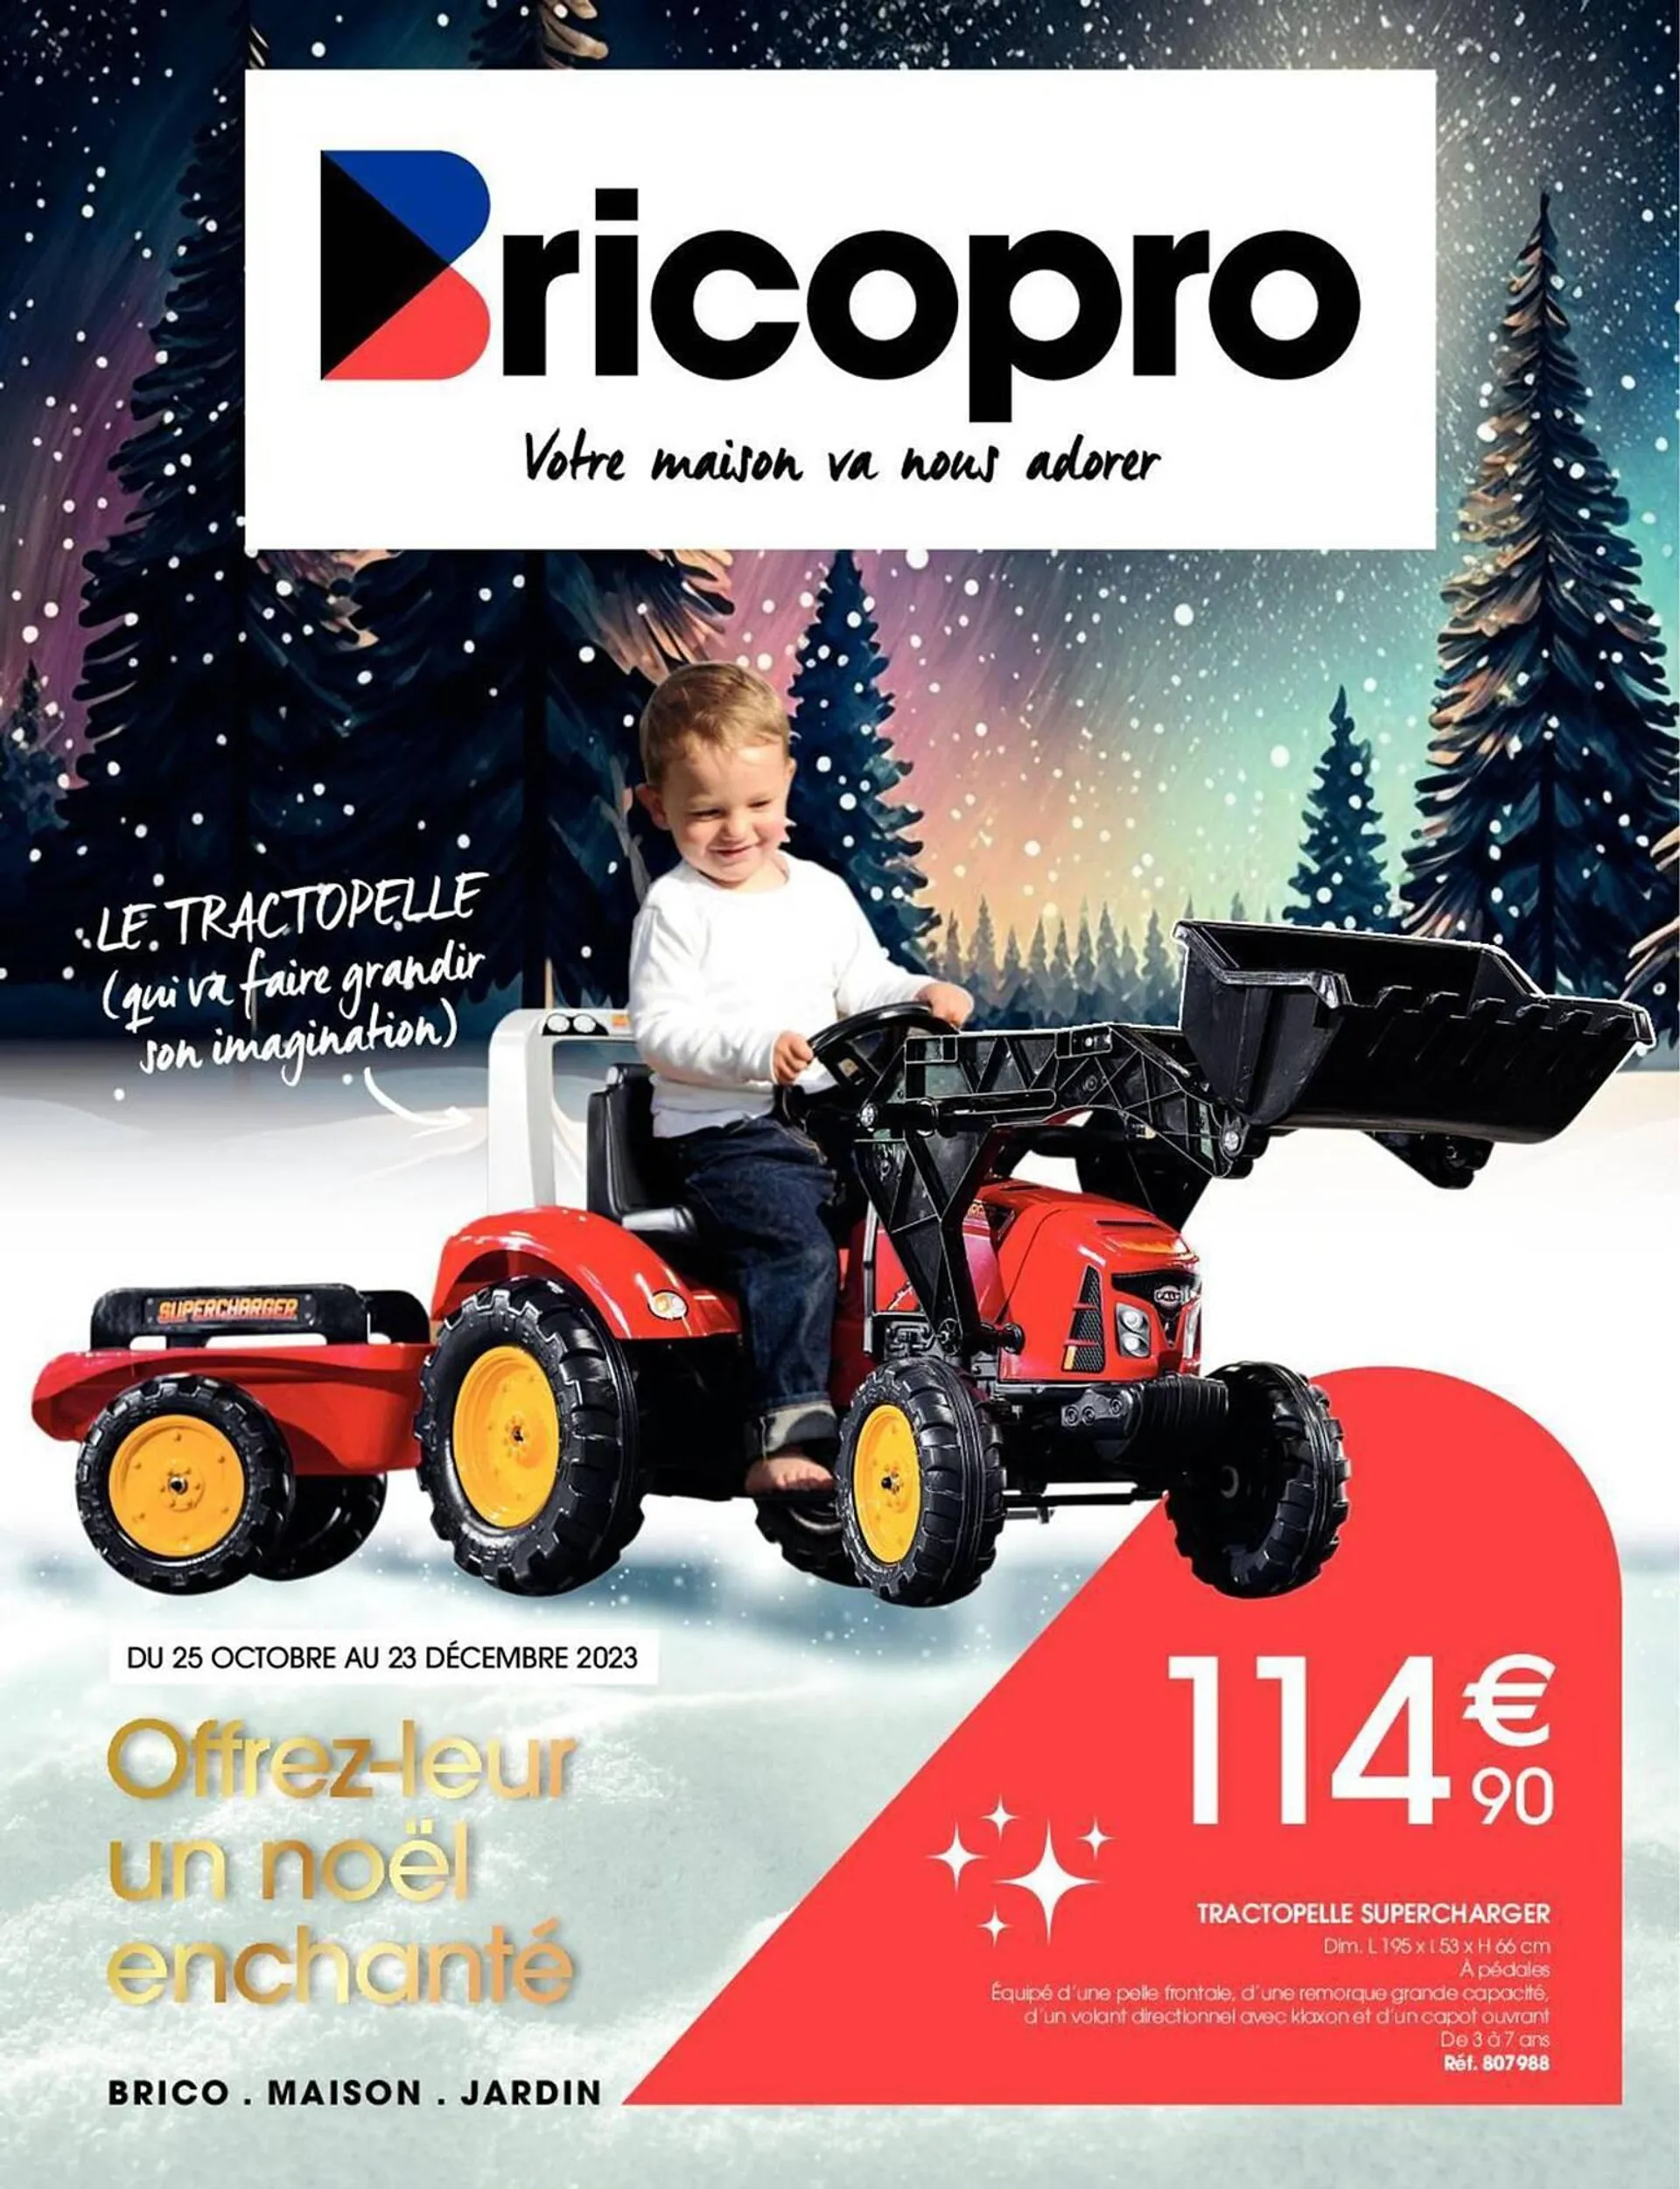 Catalogue Brico Pro